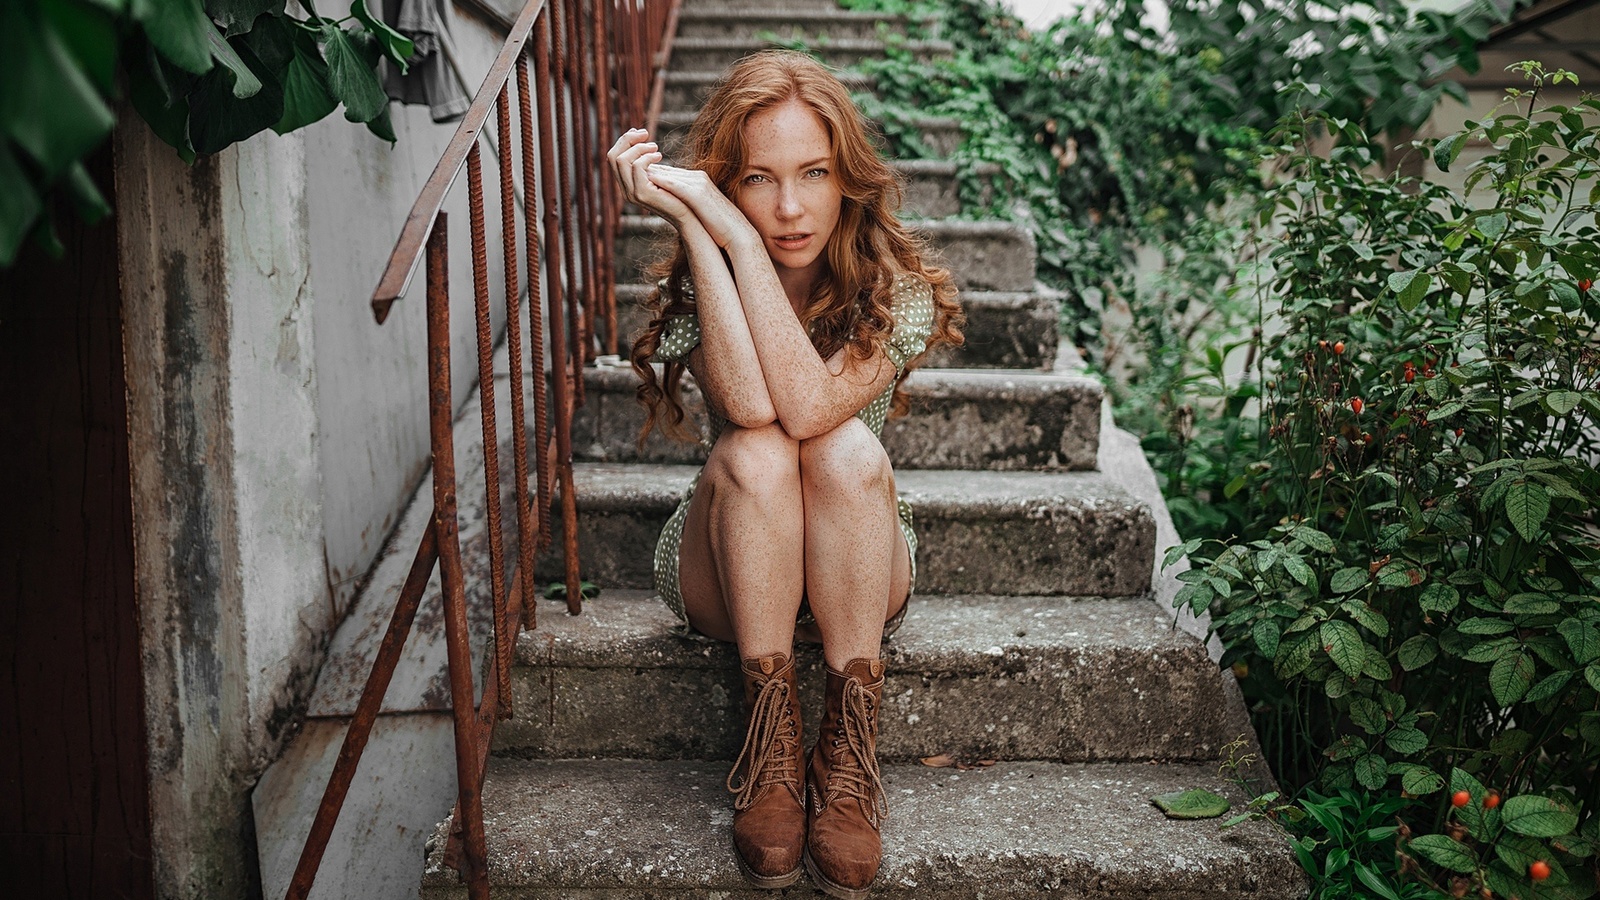 sergey freyer, women, model, redhead, women outdoors, sitting, green dress, dress, stairs, boots, plants, freckles